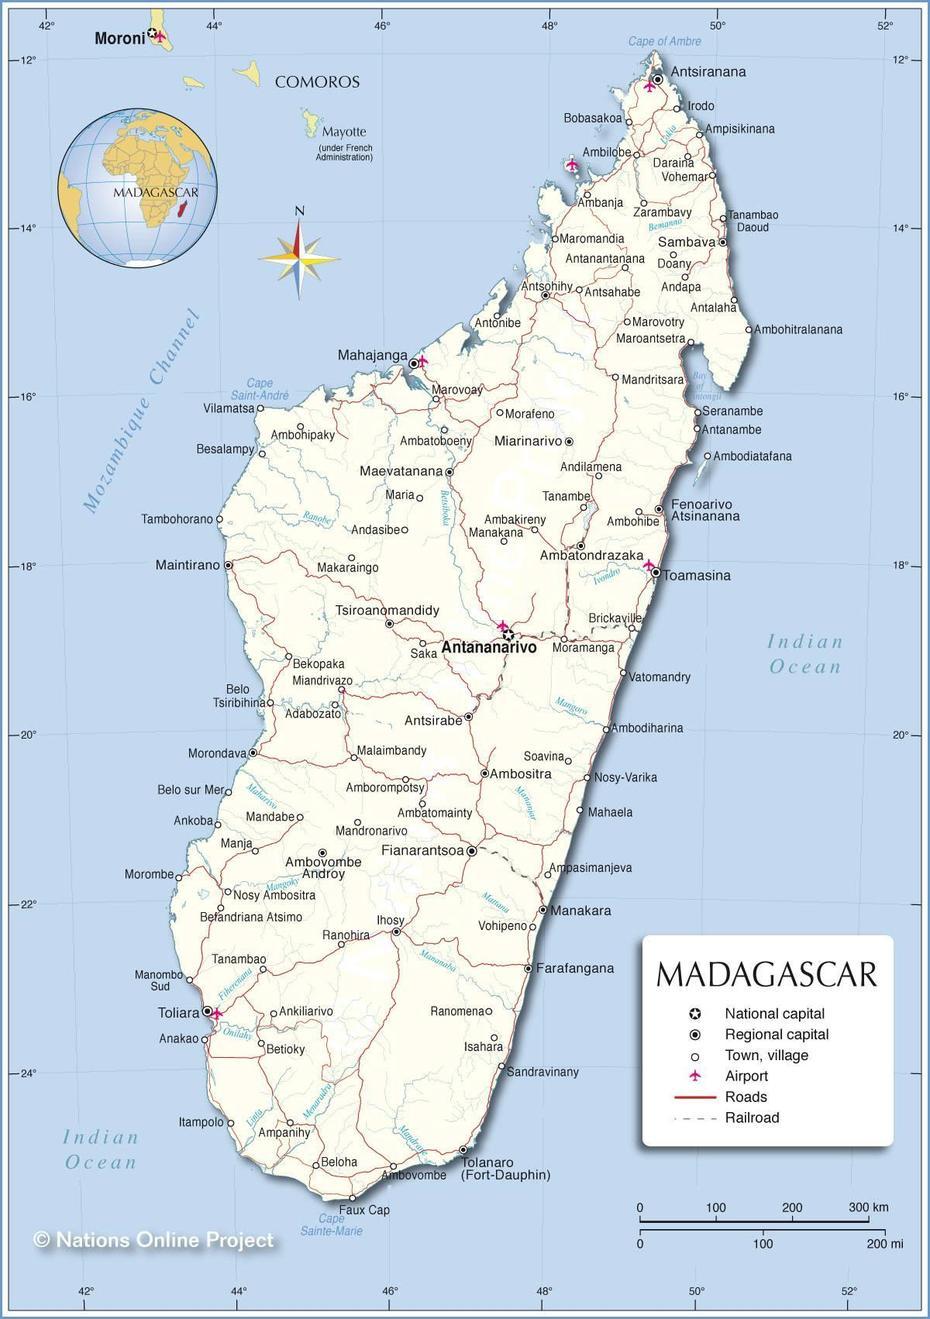 Maromokoto, Pangalanes  Lakes, Madagascar, Mahanoro, Madagascar